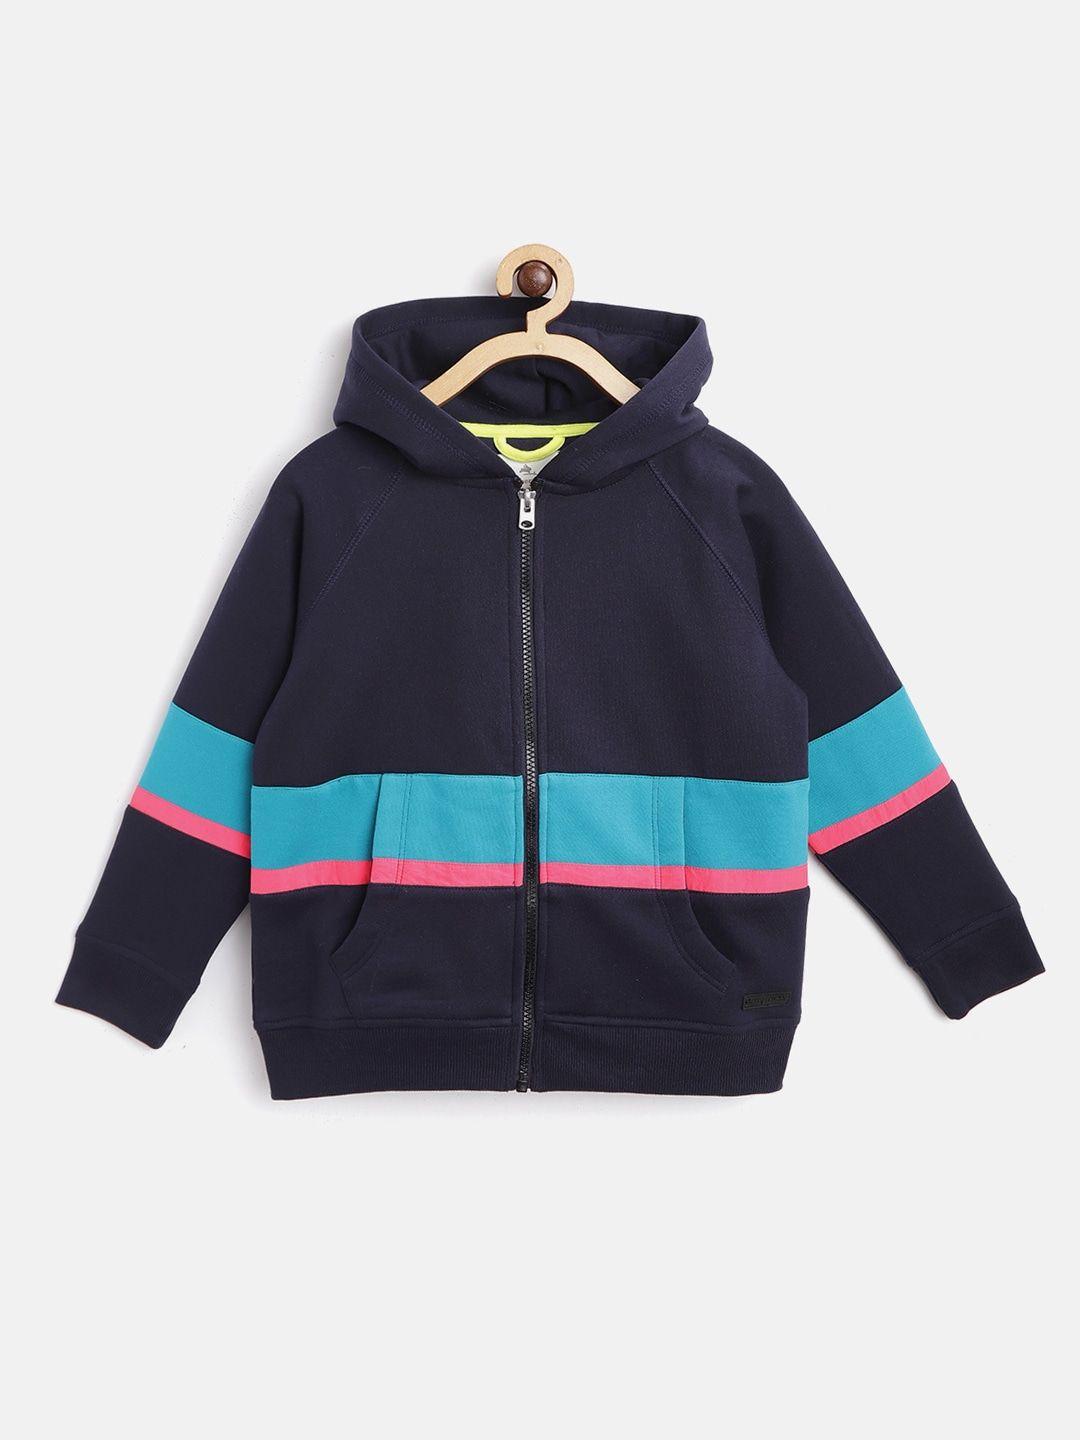 cherry crumble boys and girls navy blue cut & sew rugged colorblock hoodie sweatshirt